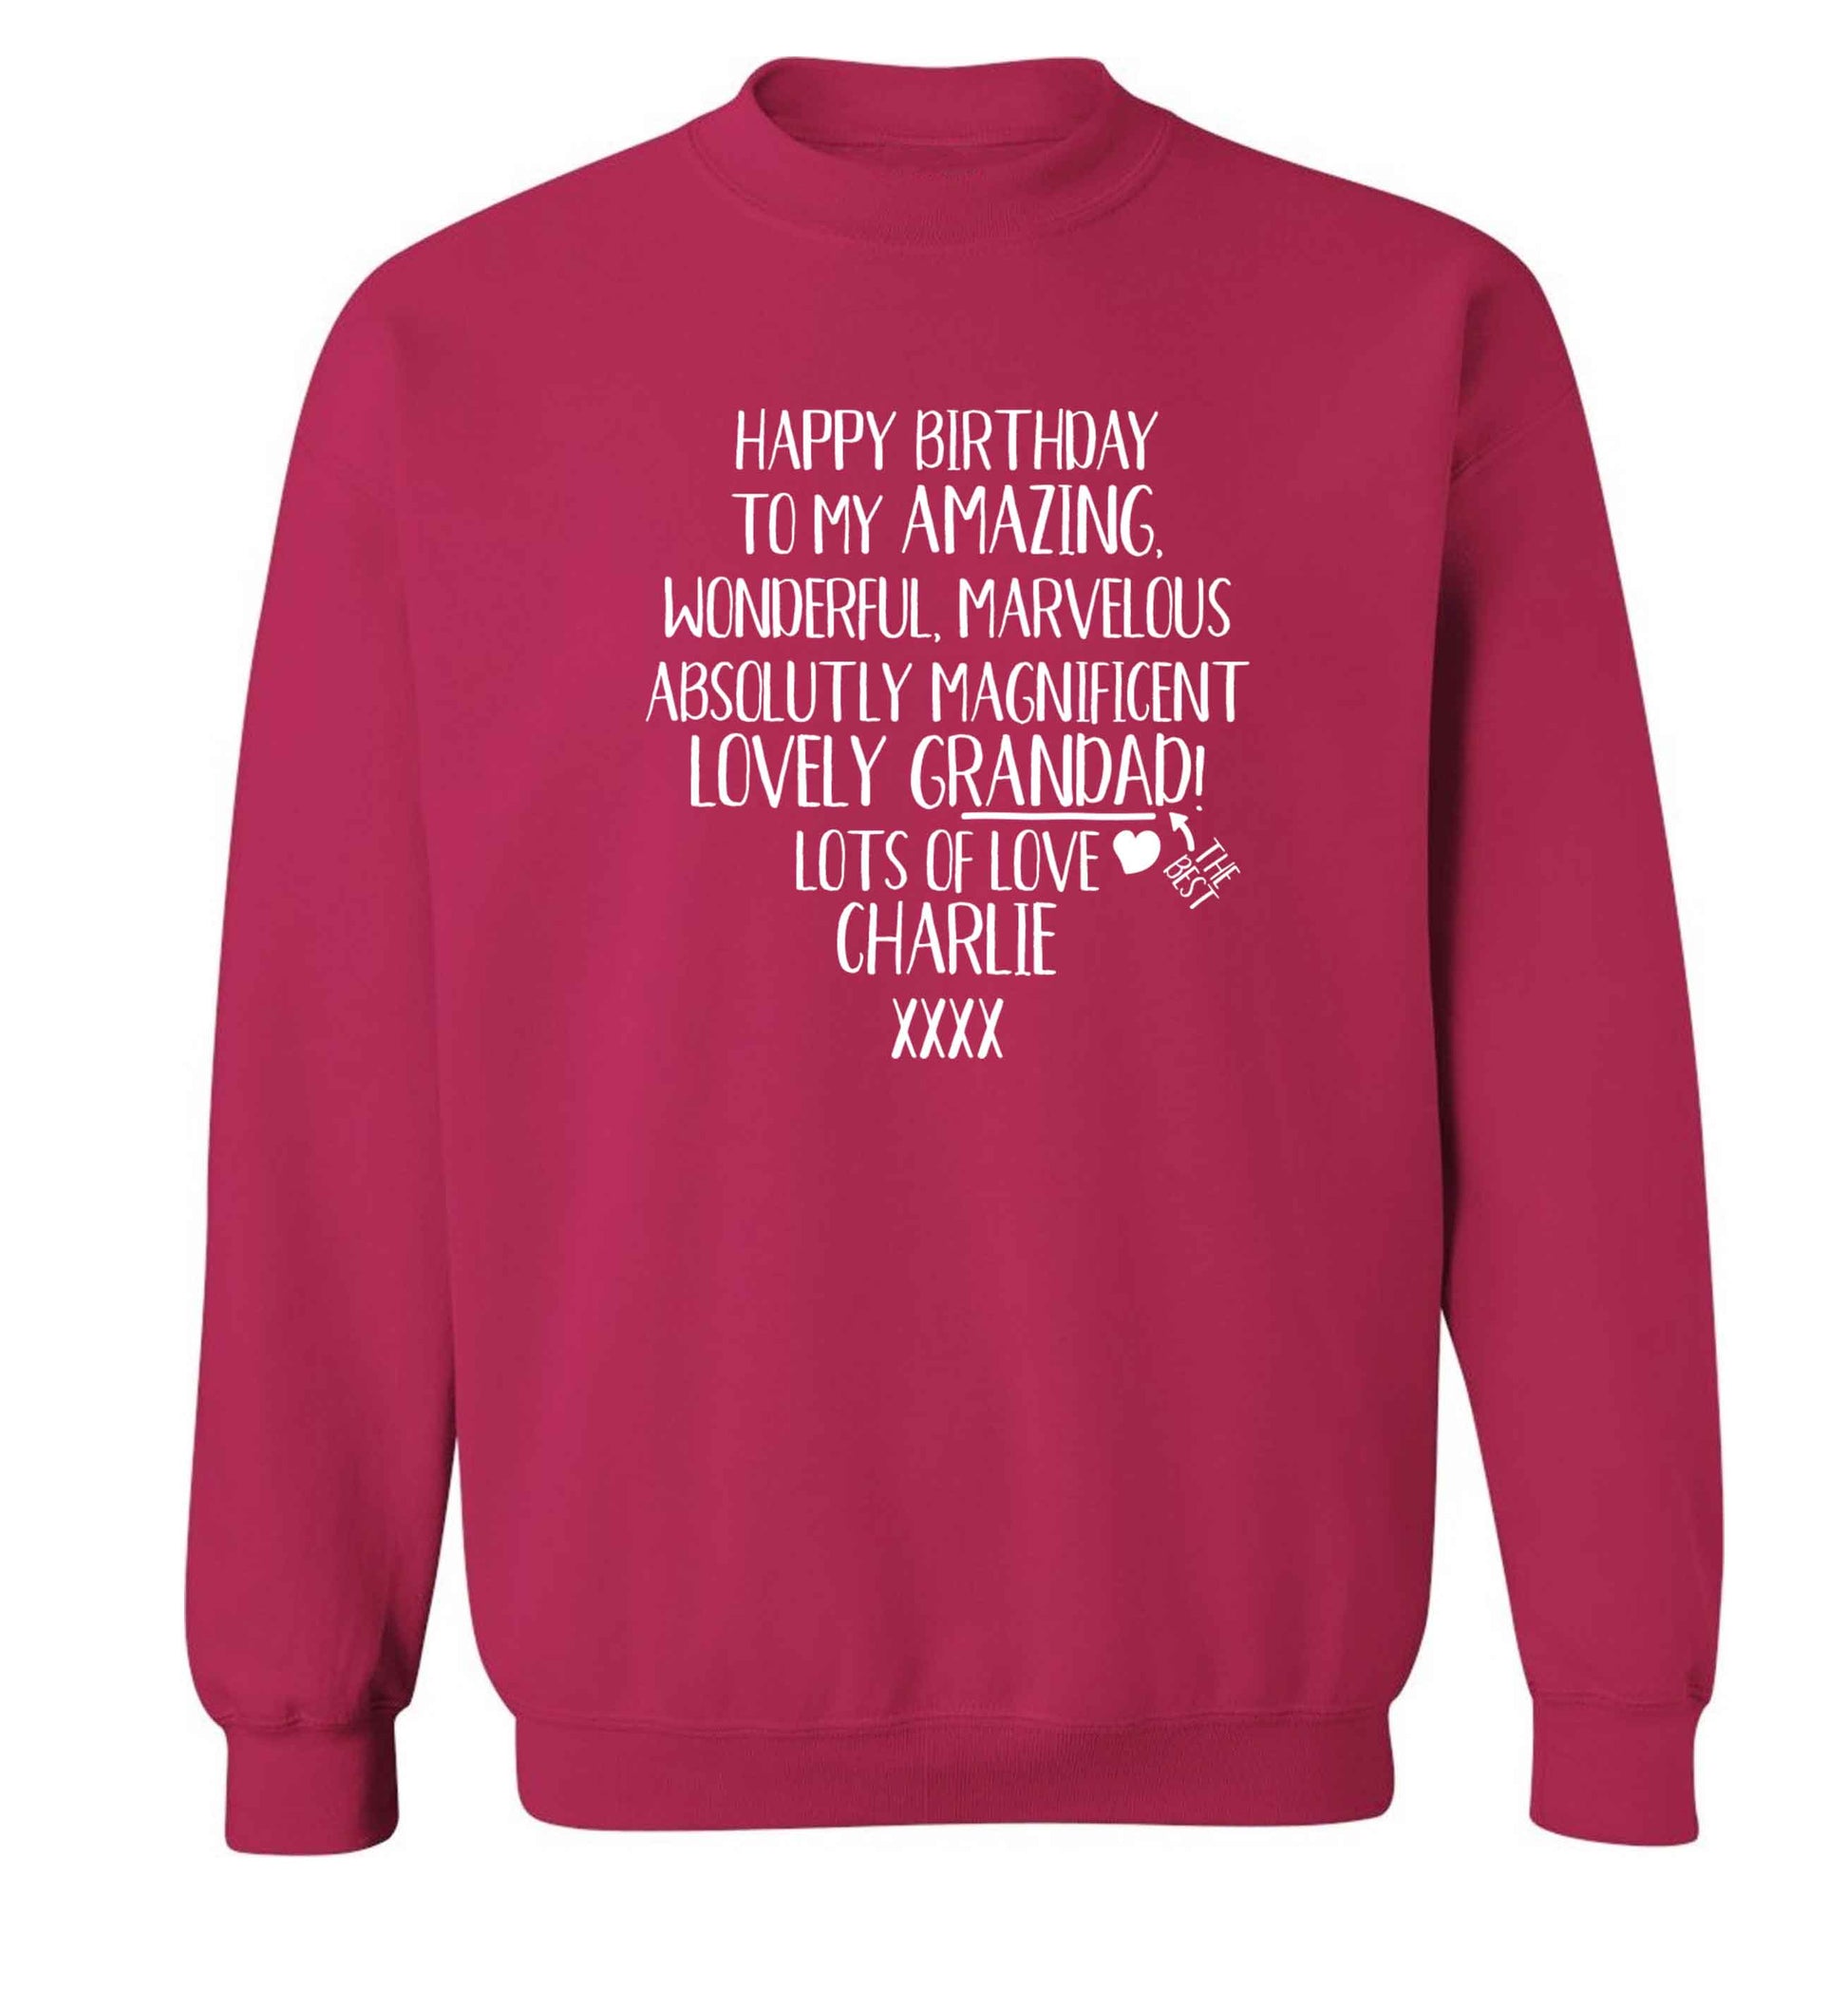 Personalised happy birthday to my amazing, wonderful, lovely grandad Adult's unisex pink Sweater 2XL